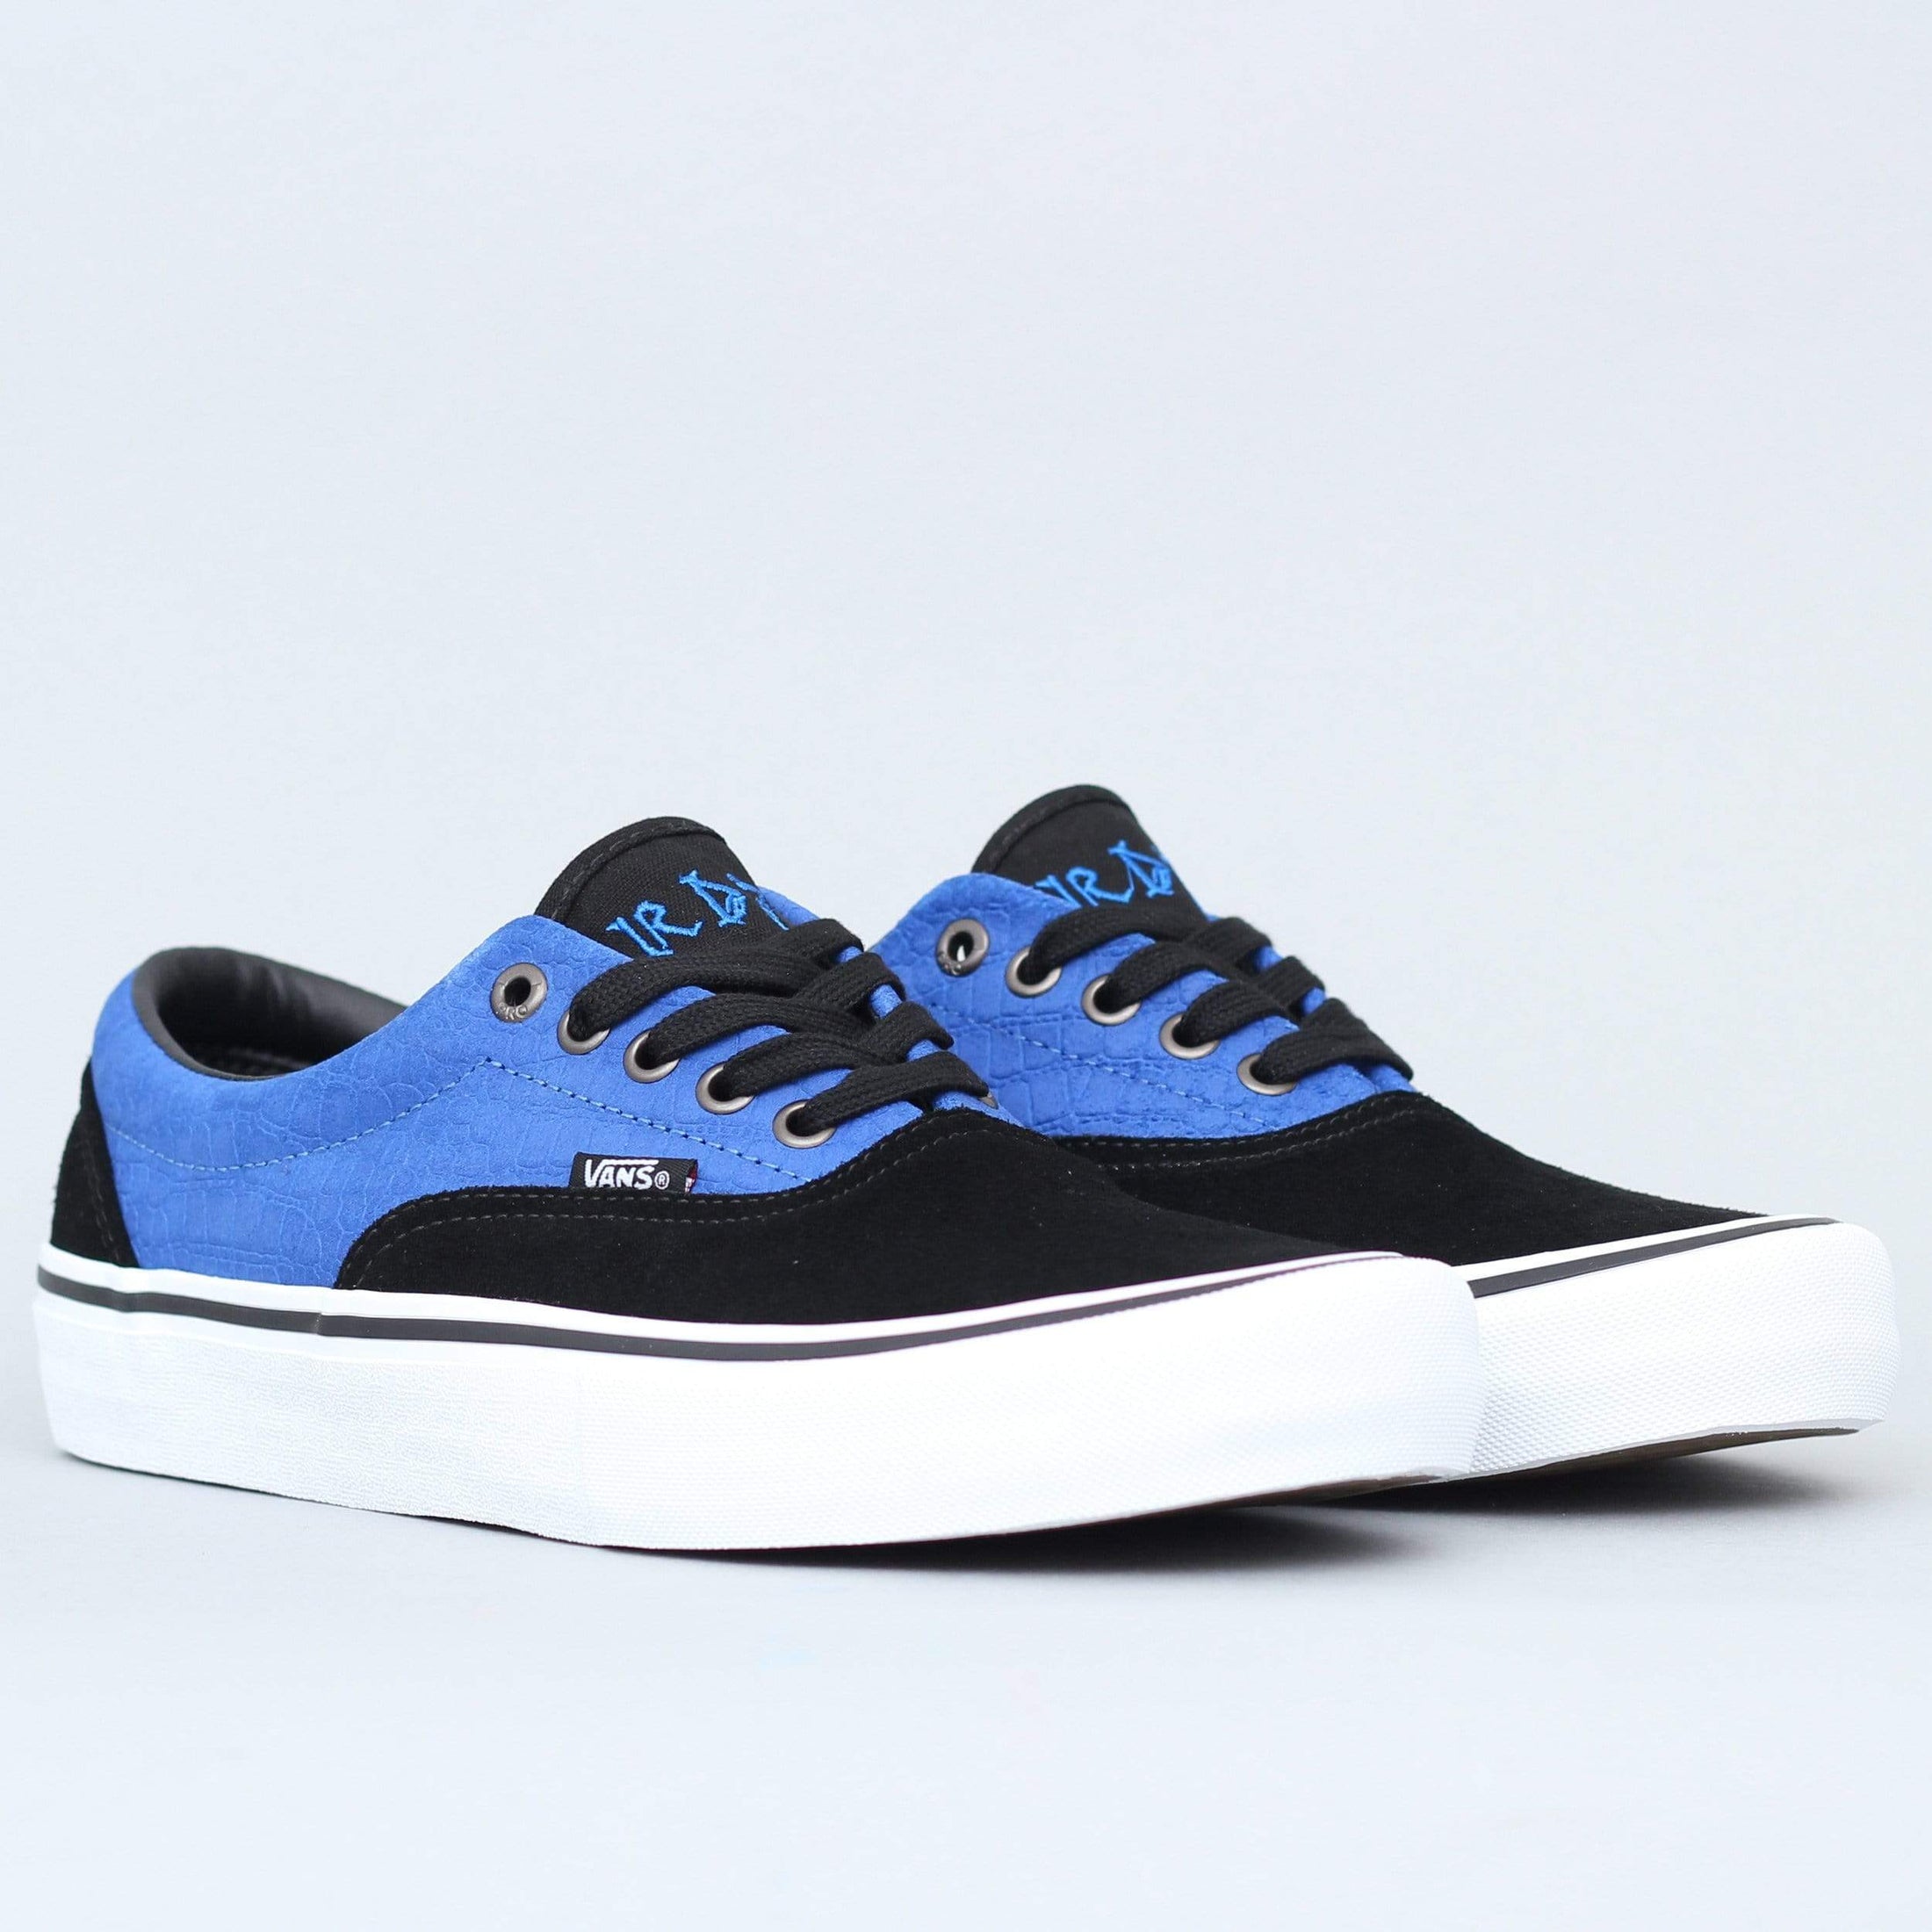 Vans Era Pro Shoes (Rowan Zorilla) Black / Blue Croc